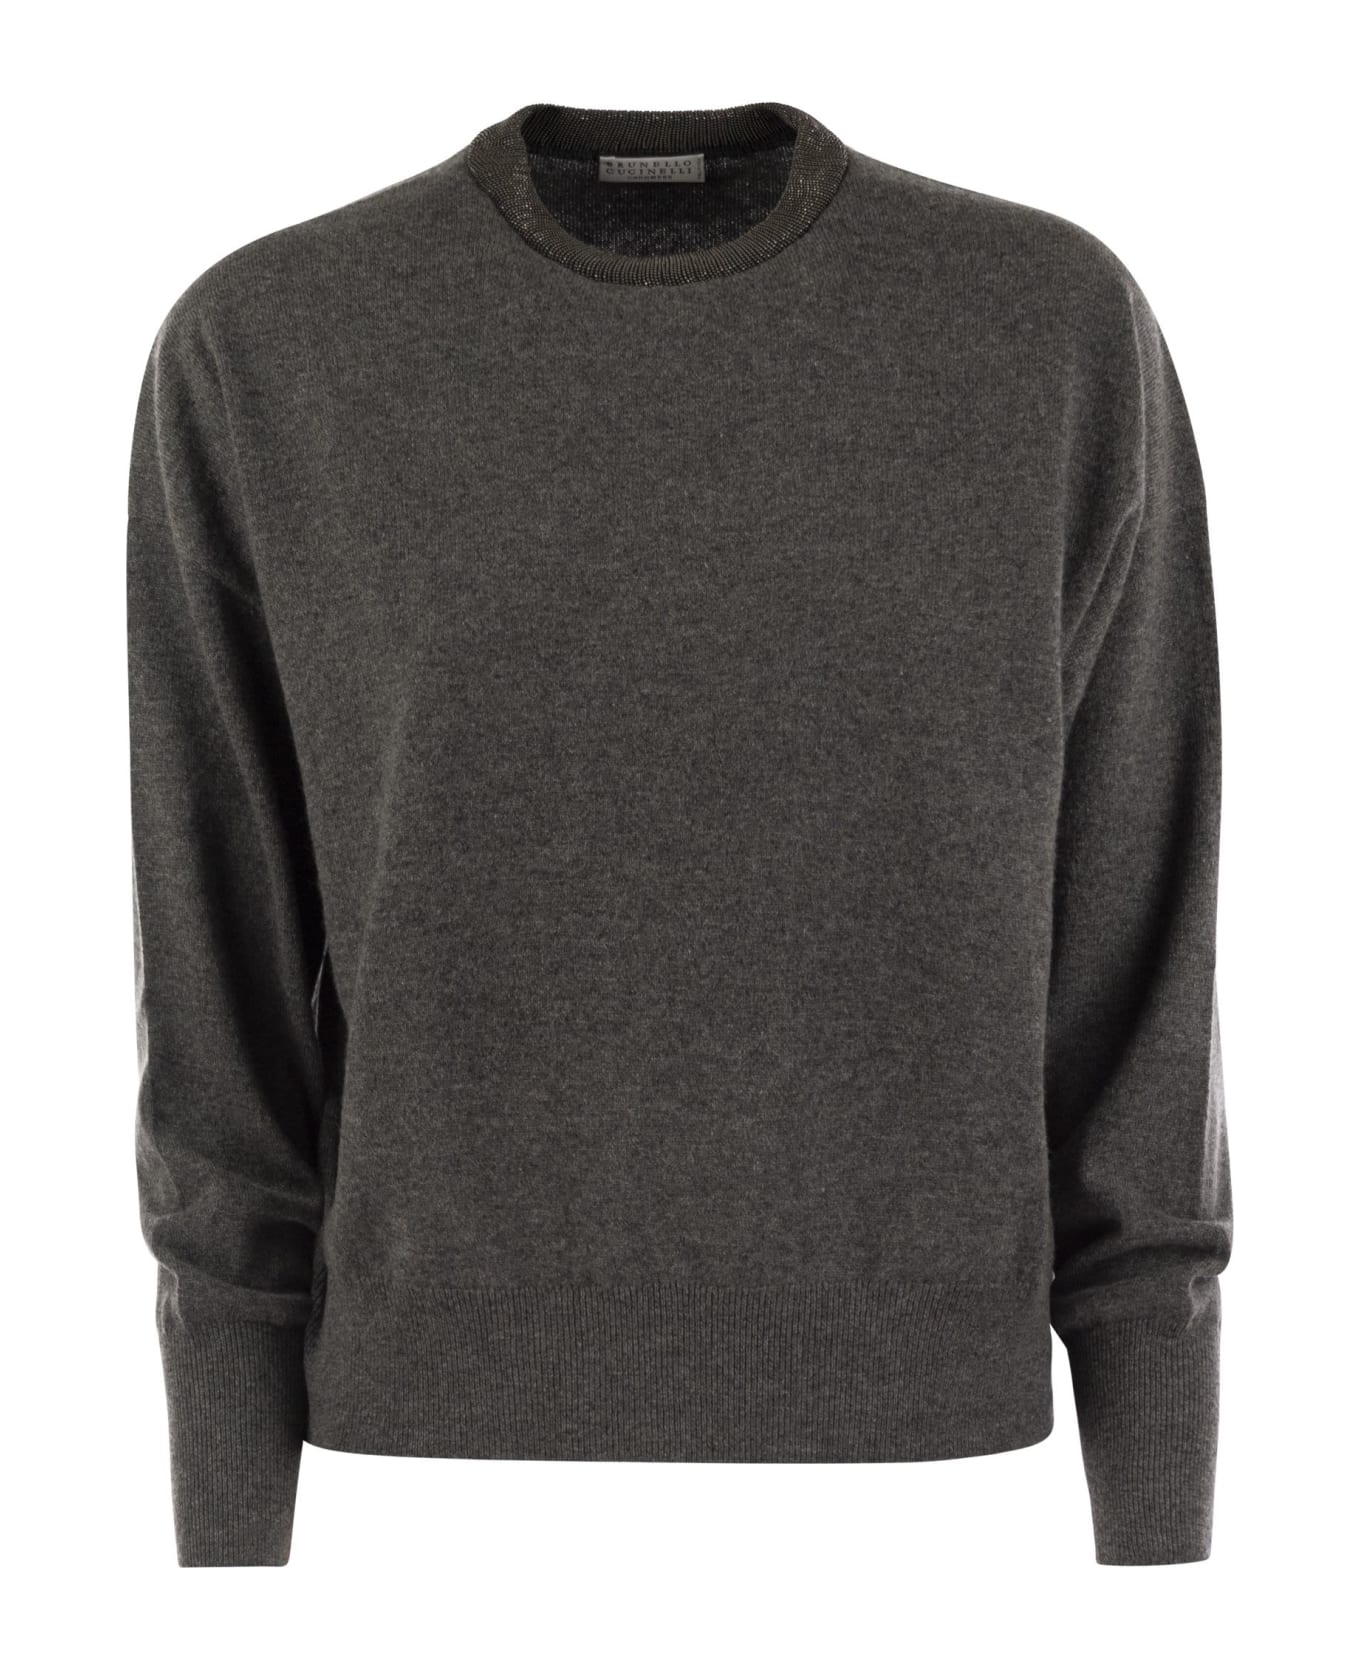 Brunello Cucinelli Cashmere Sweater With Necklace - Anthracite